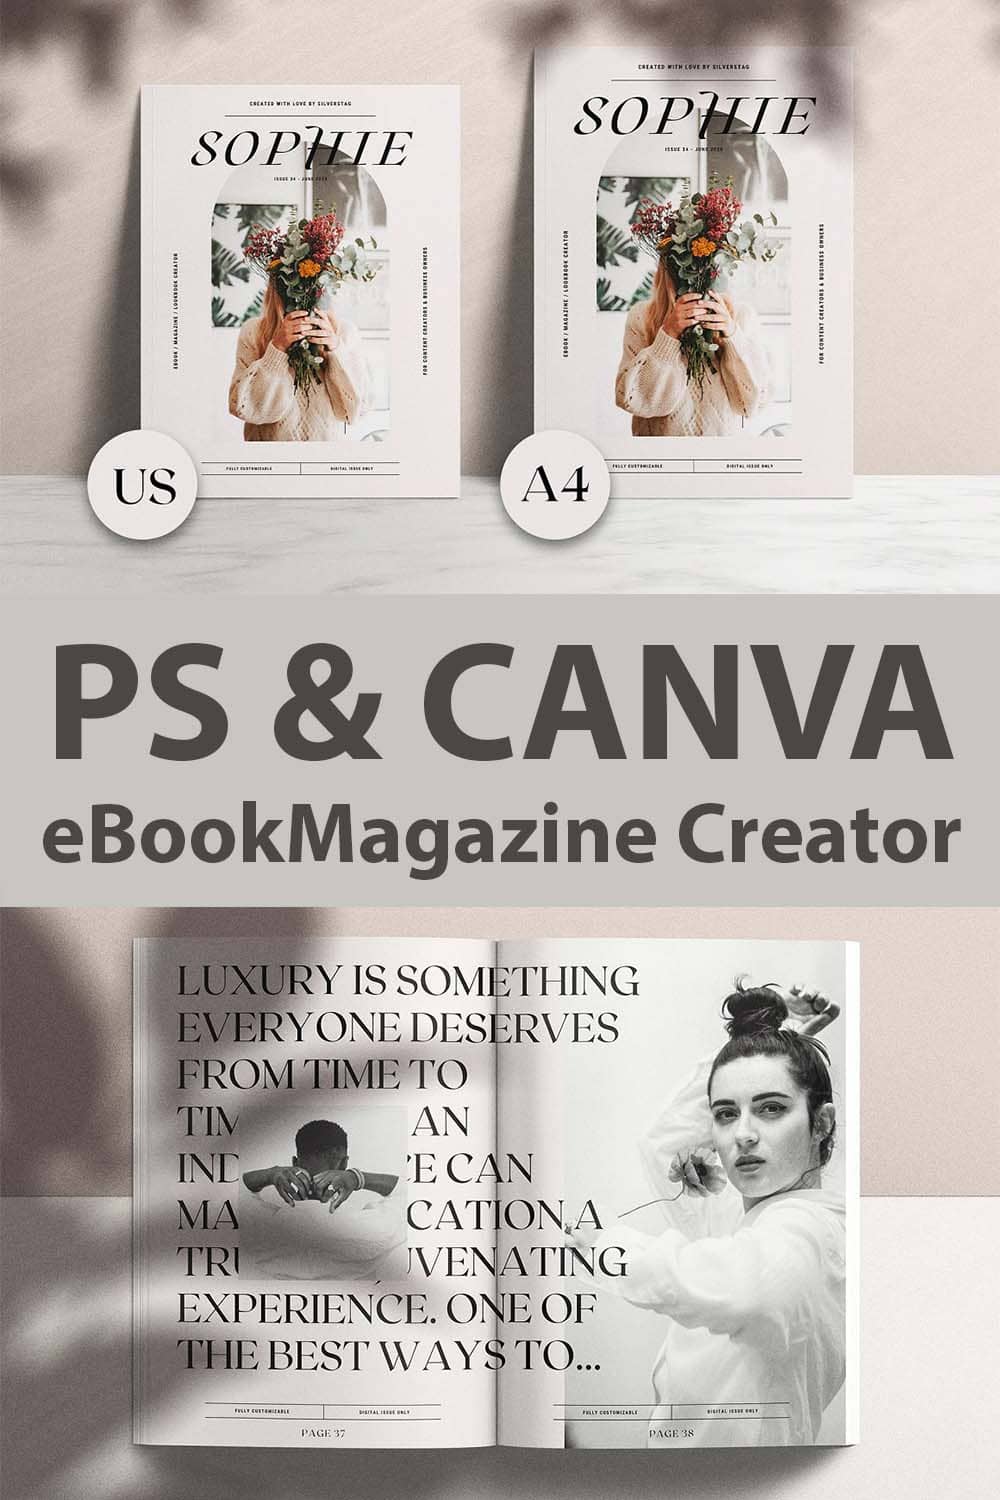 ps canva ebookmagazine creator pinterest image.